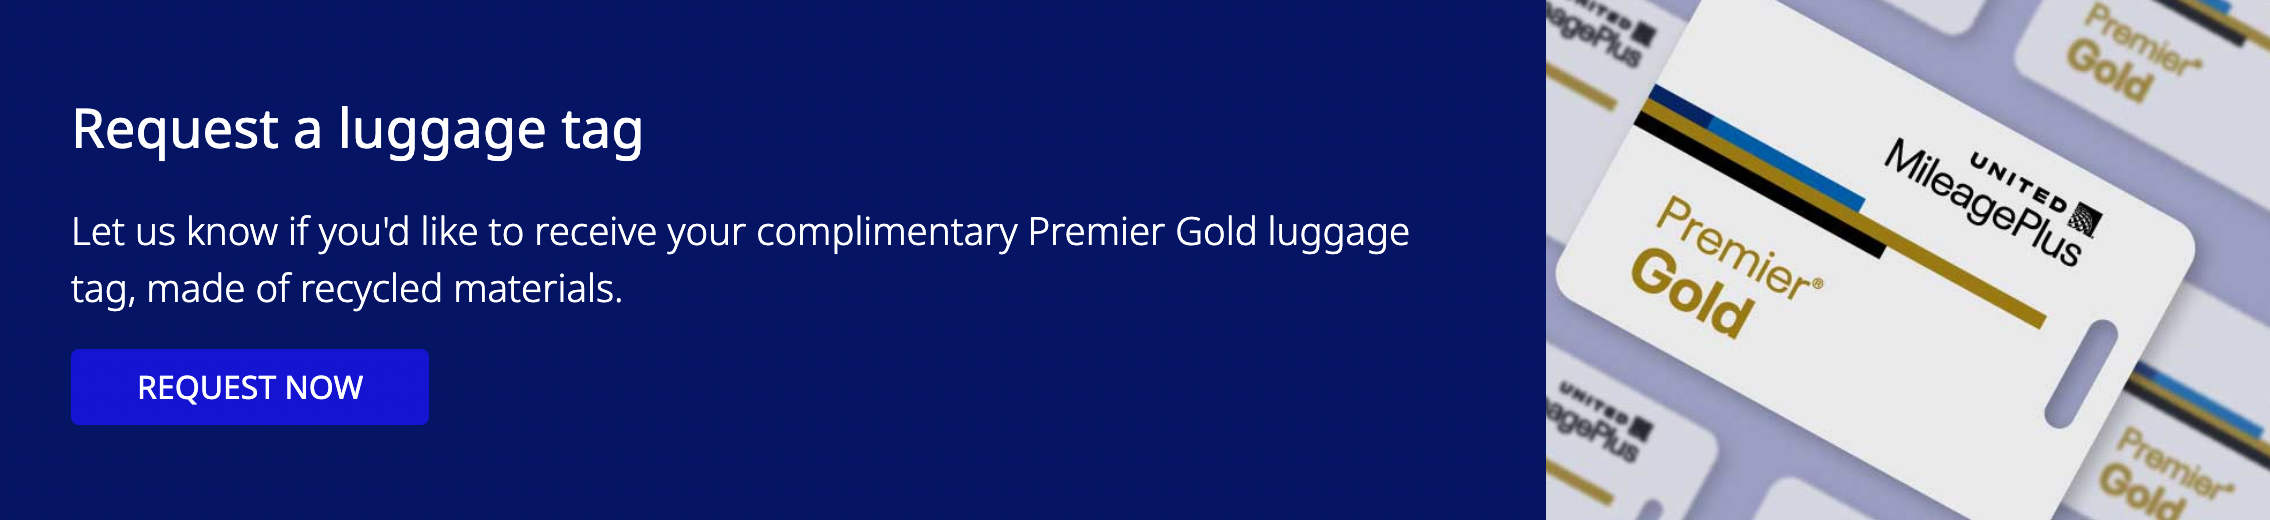 Premier Gold luggage tag